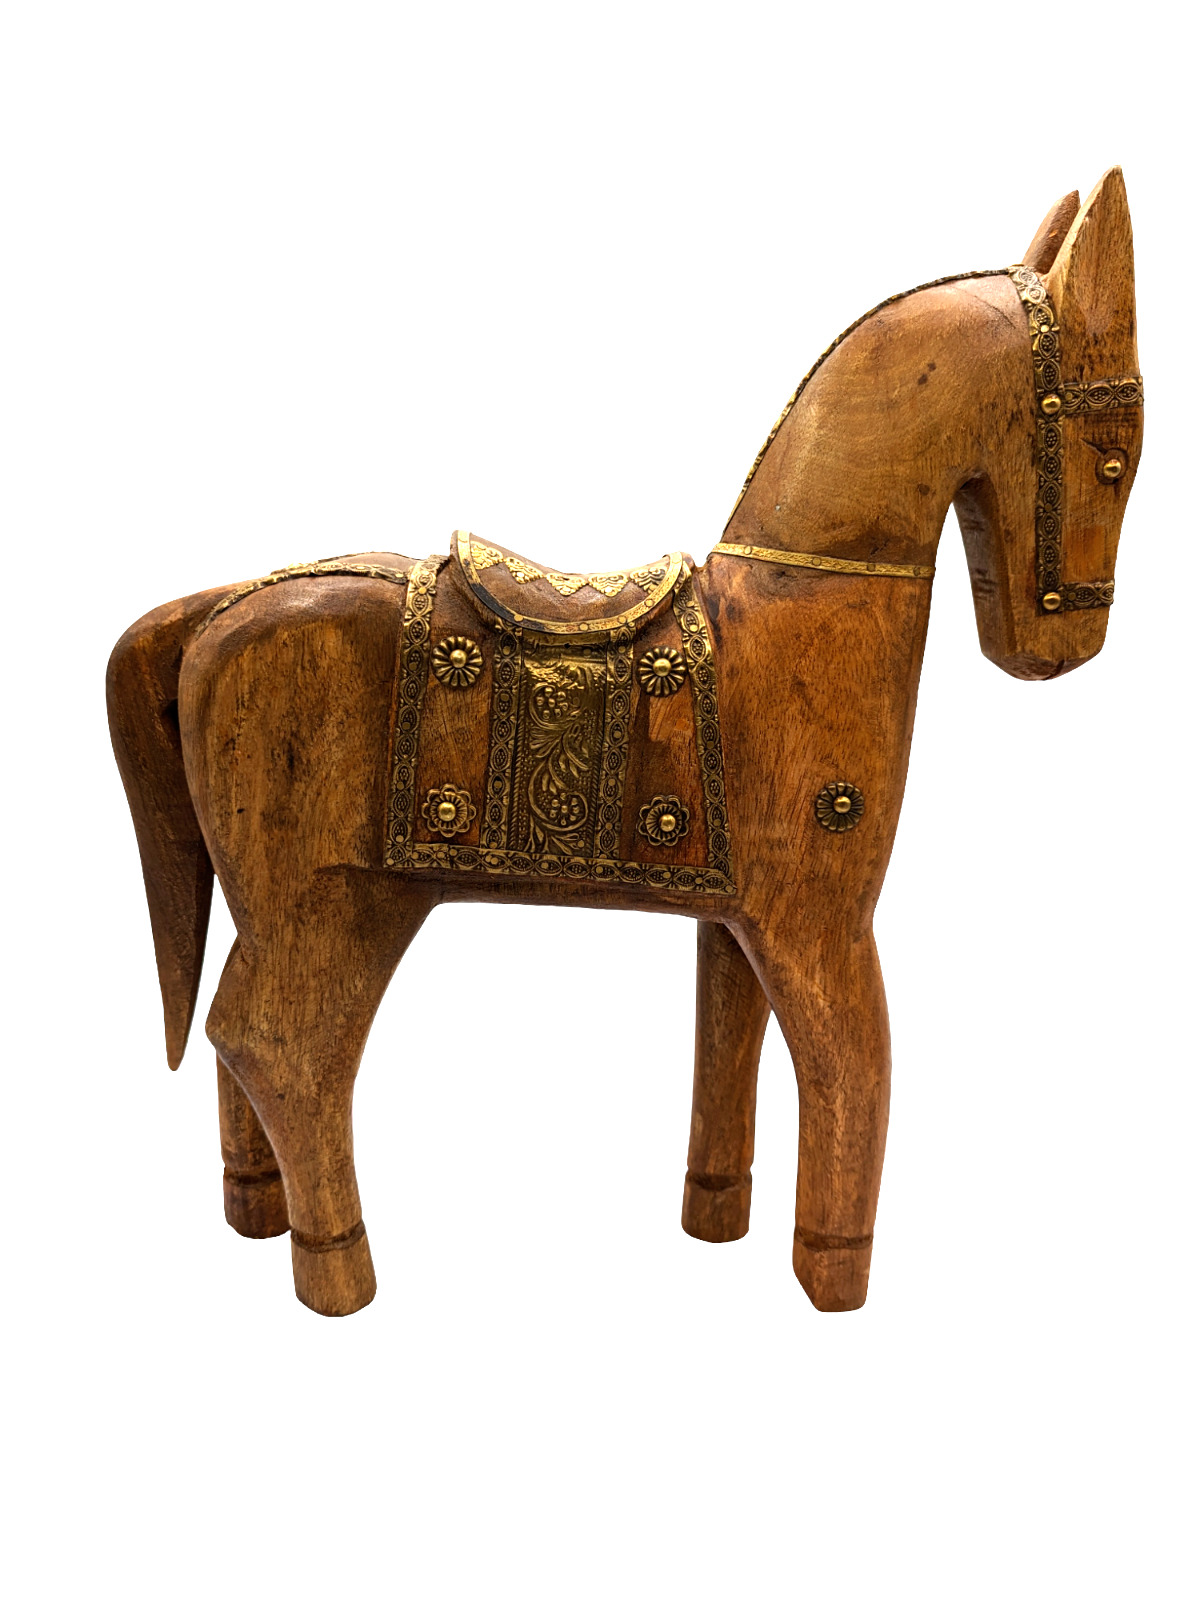 VTG Wooden Horse Figurine Hand carved with Brass Decorations Original Signed